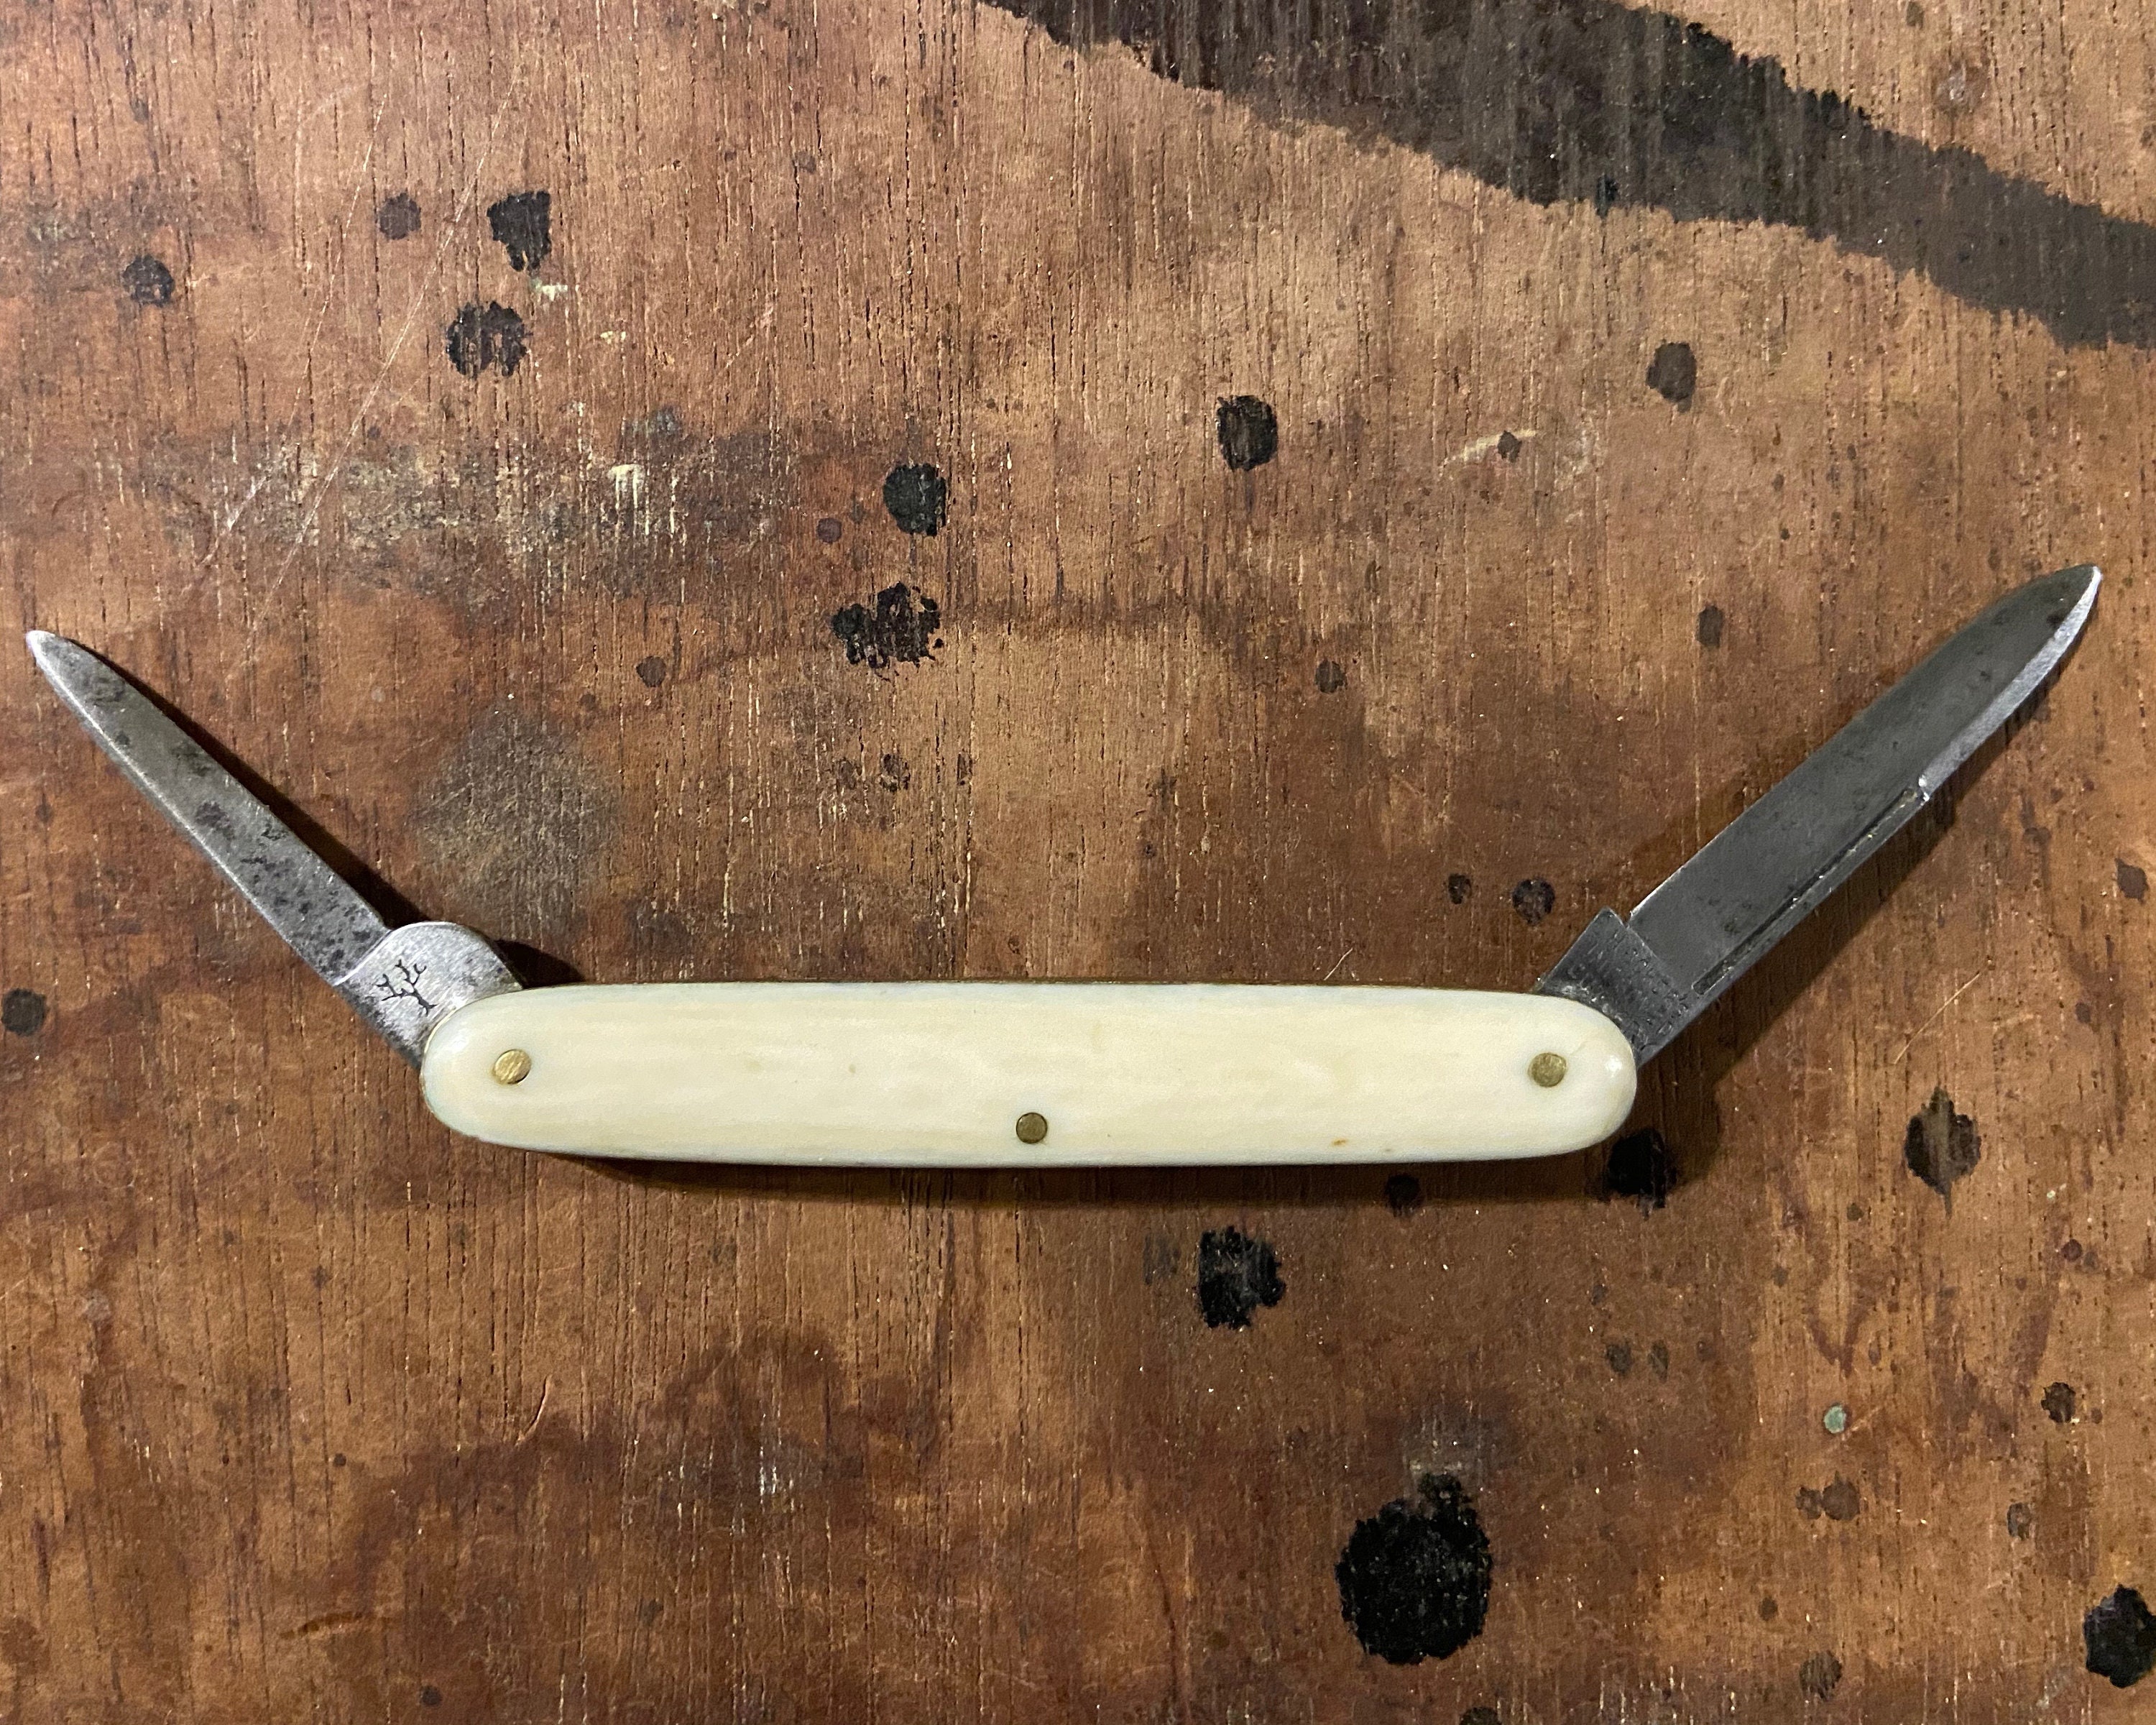 JACOBS EDJHOLD Clever Knife Vintage Wood Handle Long Blade old kitchen tool